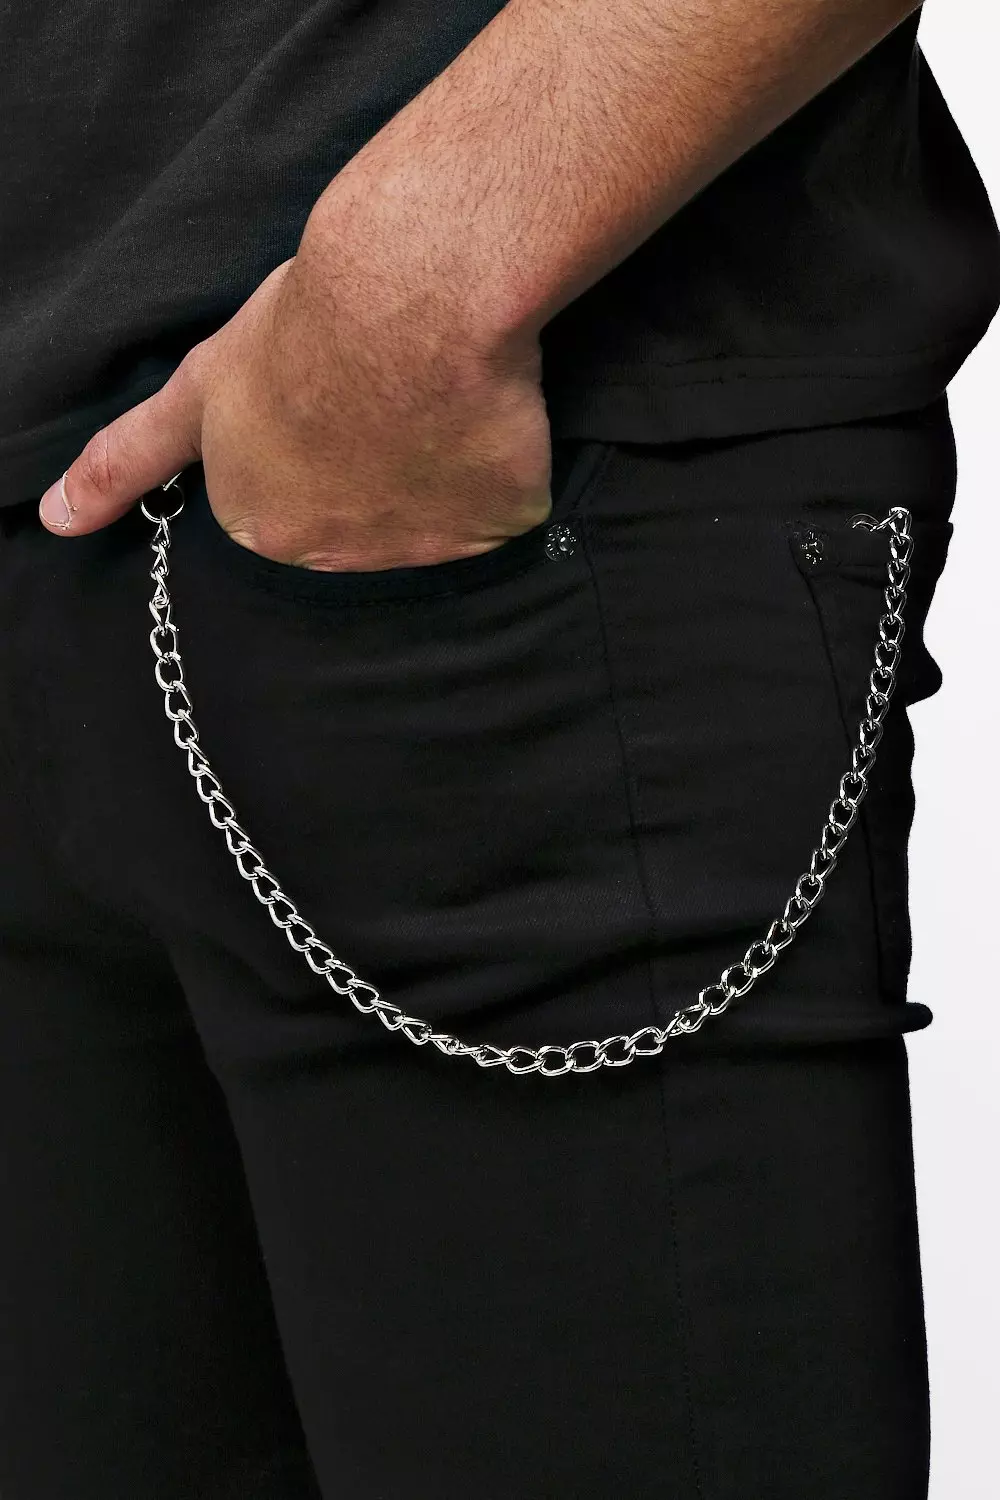 Jemiwa Hip Hop Pants Chain Punk Silver Trousers Chains Layer Pocket  Keychain Biker Rock Wallet Jean Jewelry